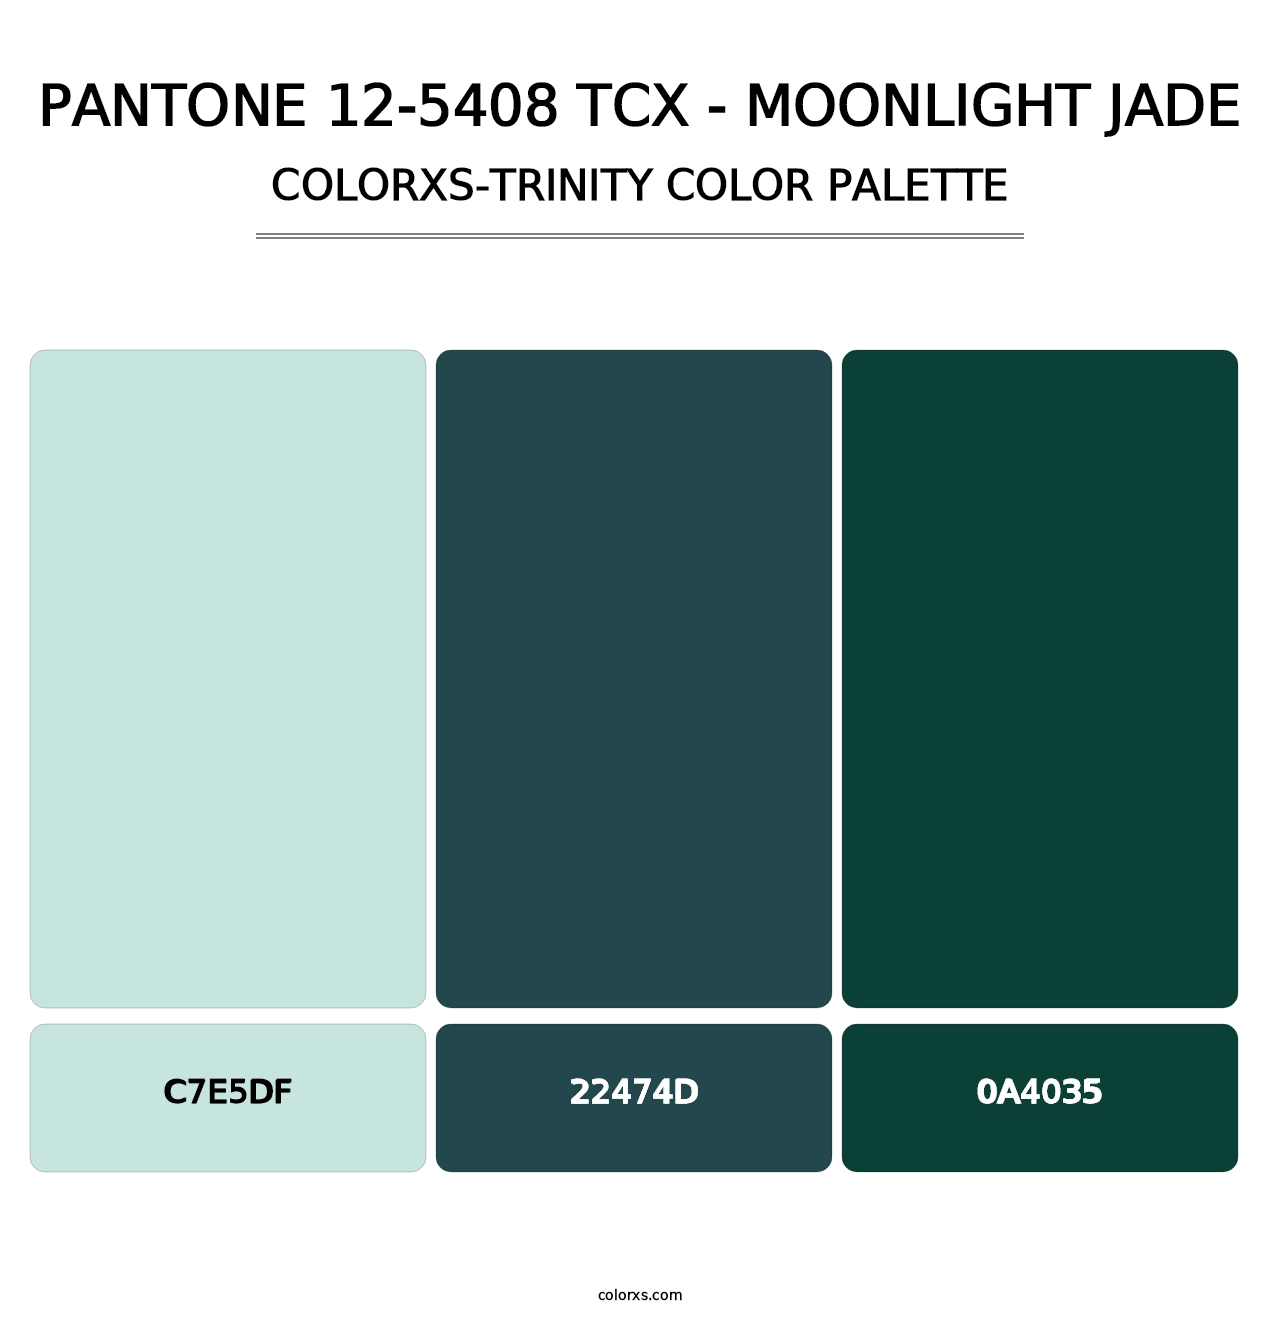 PANTONE 12-5408 TCX - Moonlight Jade - Colorxs Trinity Palette